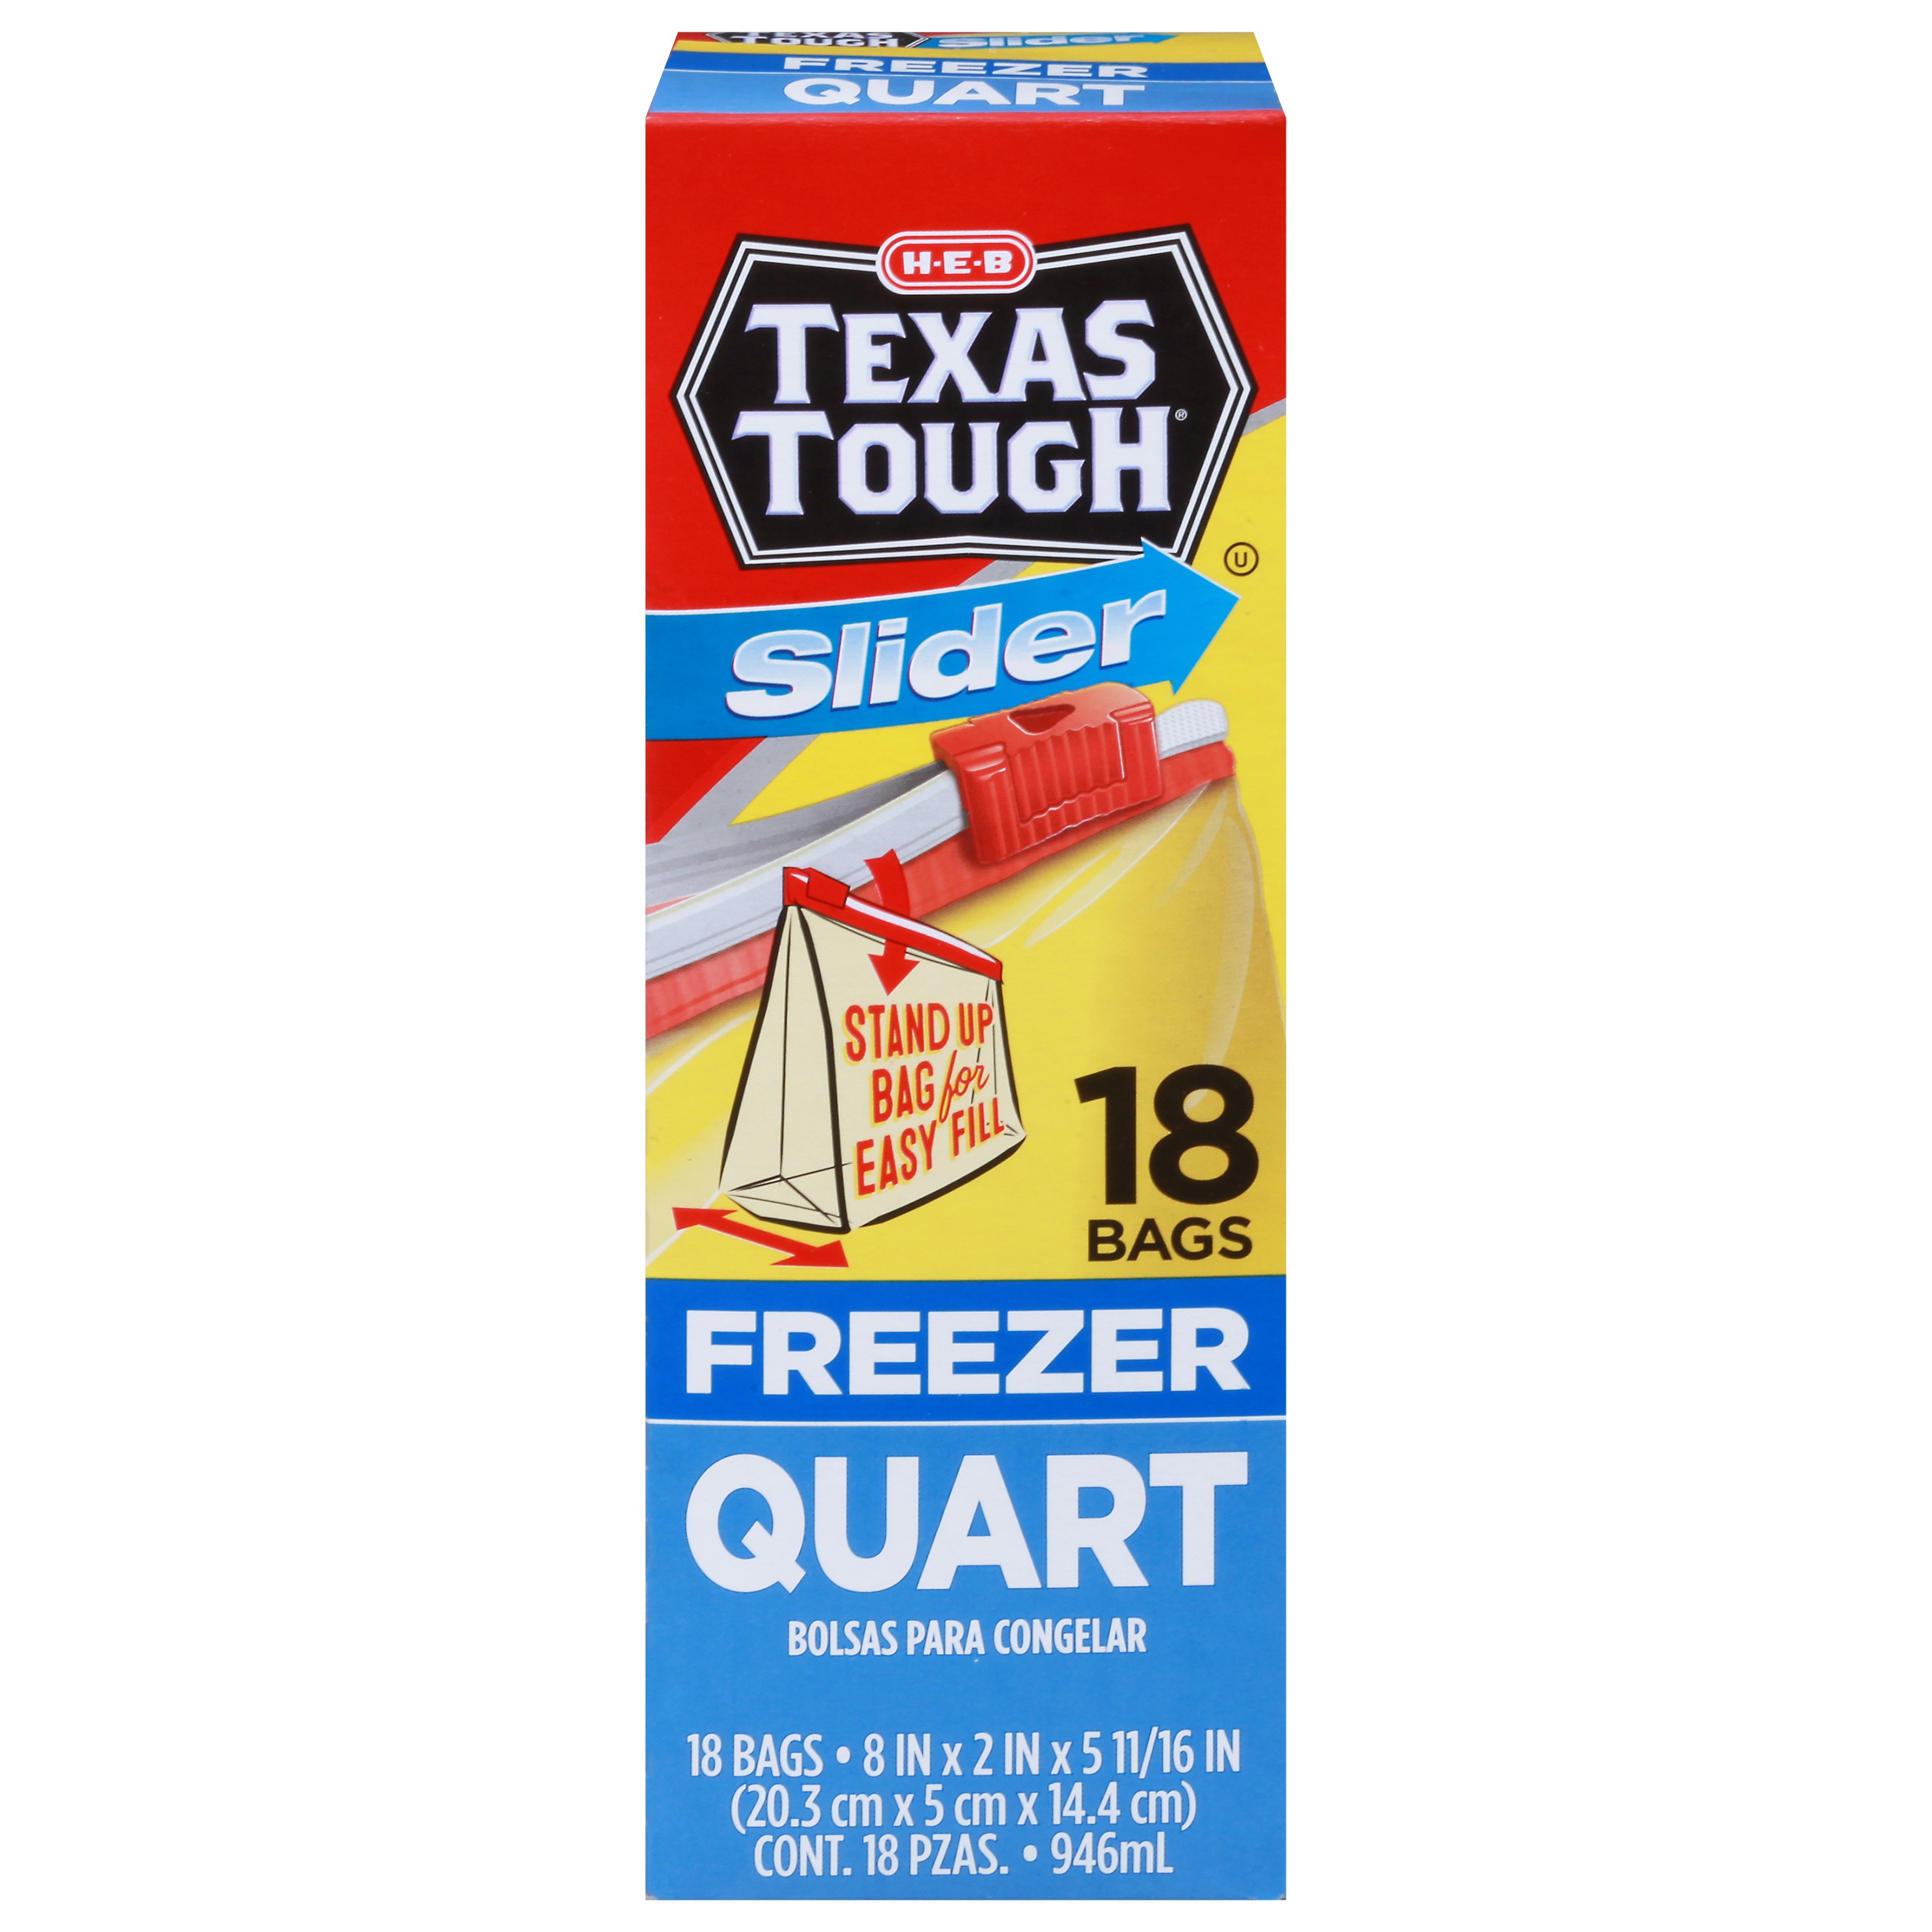 H-E-B Texas Tough Double Zipper Quart Freezer Bags - Shop Storage